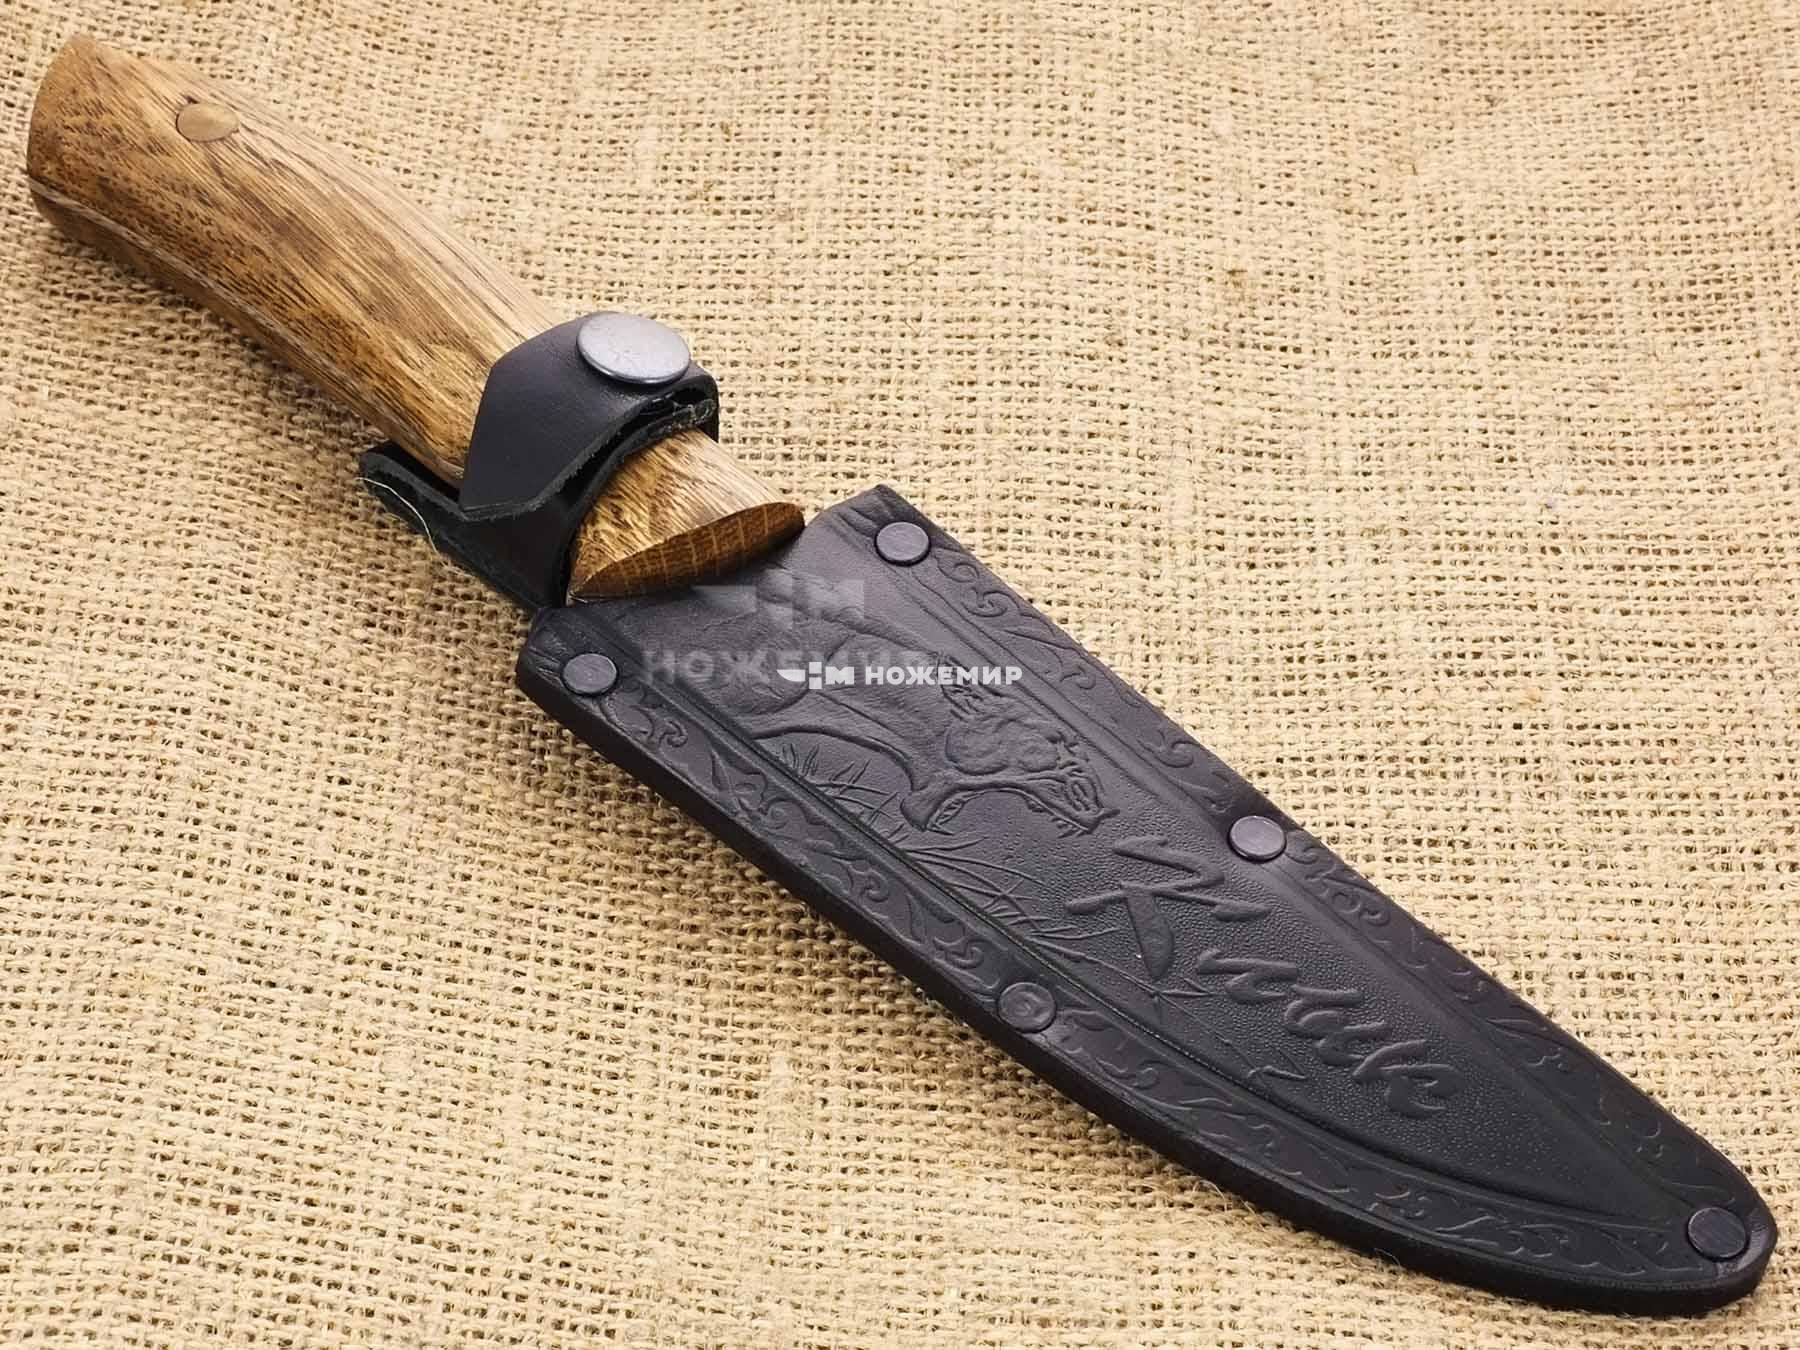 Нож Кизлярский 65Х13  рукоять орех КЛЫК3-ЦМ (6343) с кожаным чехлом